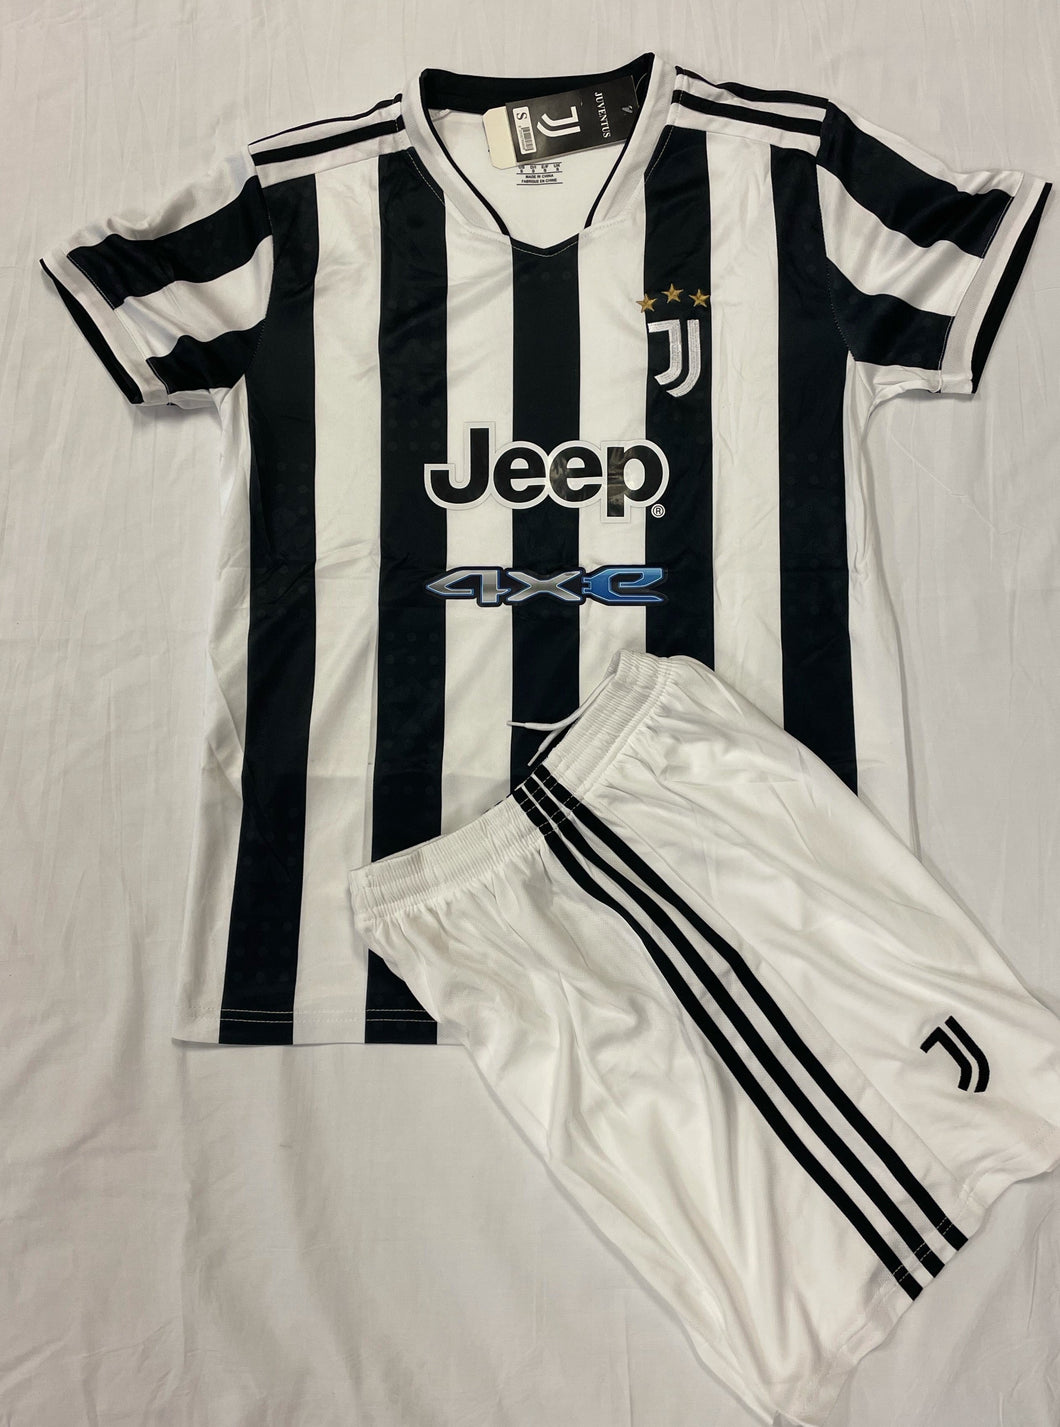 Juventus 21/22 Kids Home Soccer Uniform - The Art of Soccer Shop